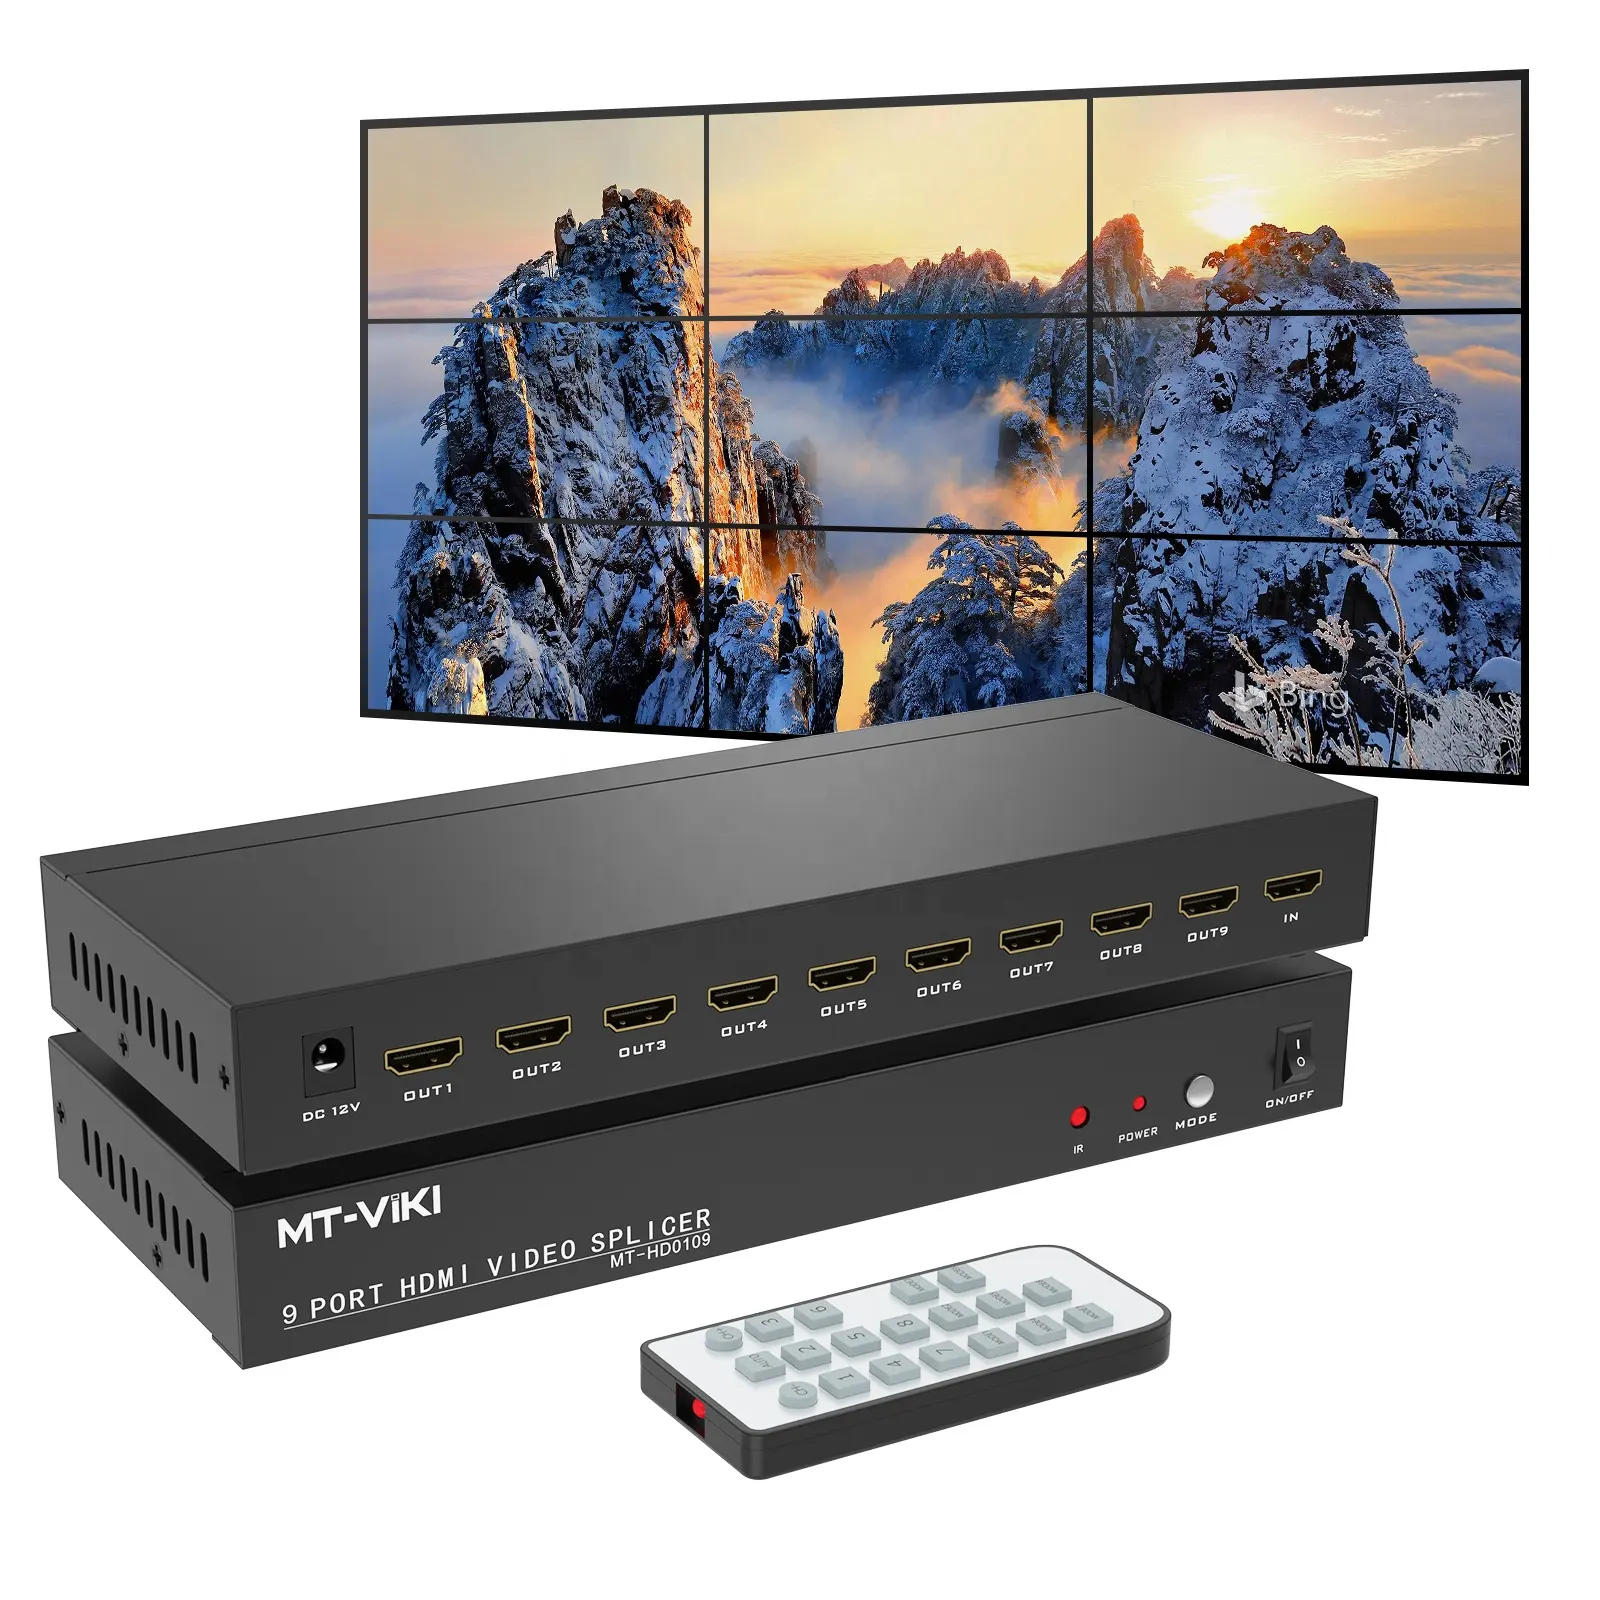 4K 30Hz HDMI Video duvar denetleyicisi 3x3, MT-VIKI 9 Port Multiviewer HDMI Video duvar Splicer 3x3 IR ile